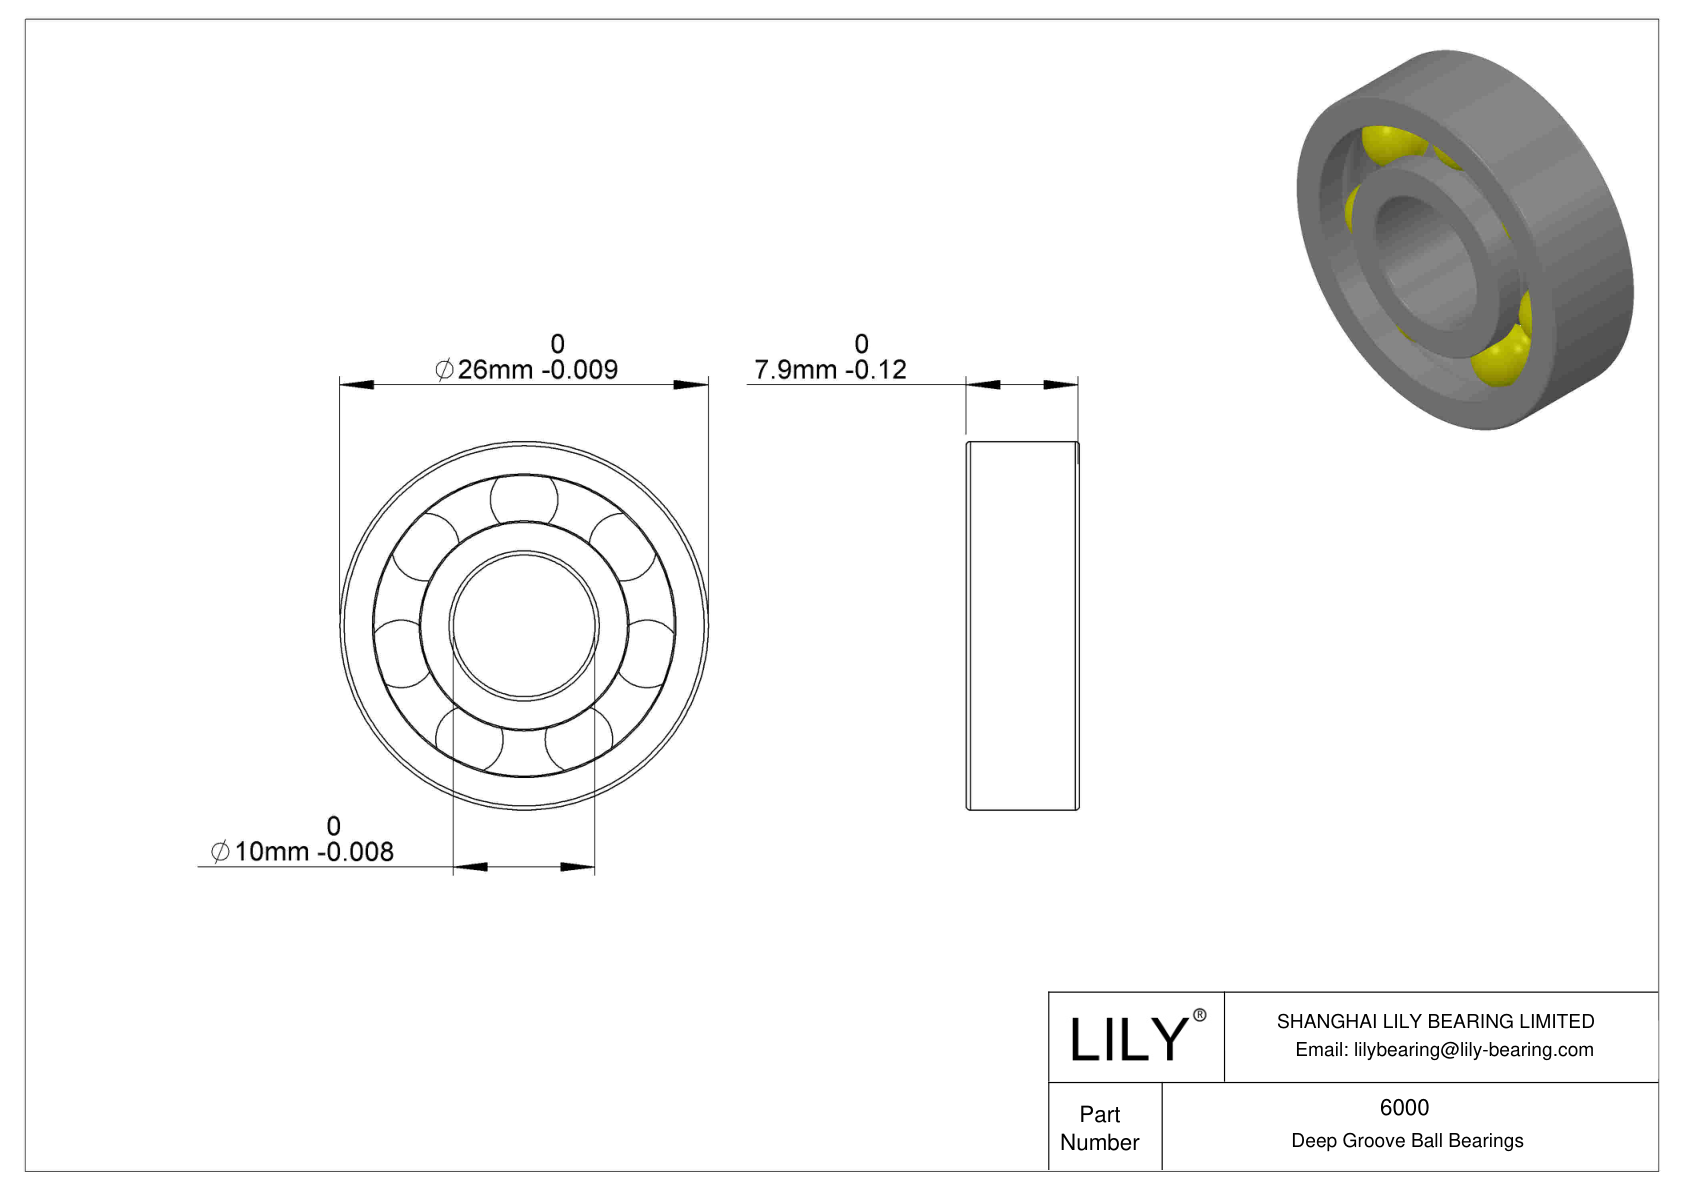 LILY-PU600040-10 Polyurethane Coated Bearing cad drawing